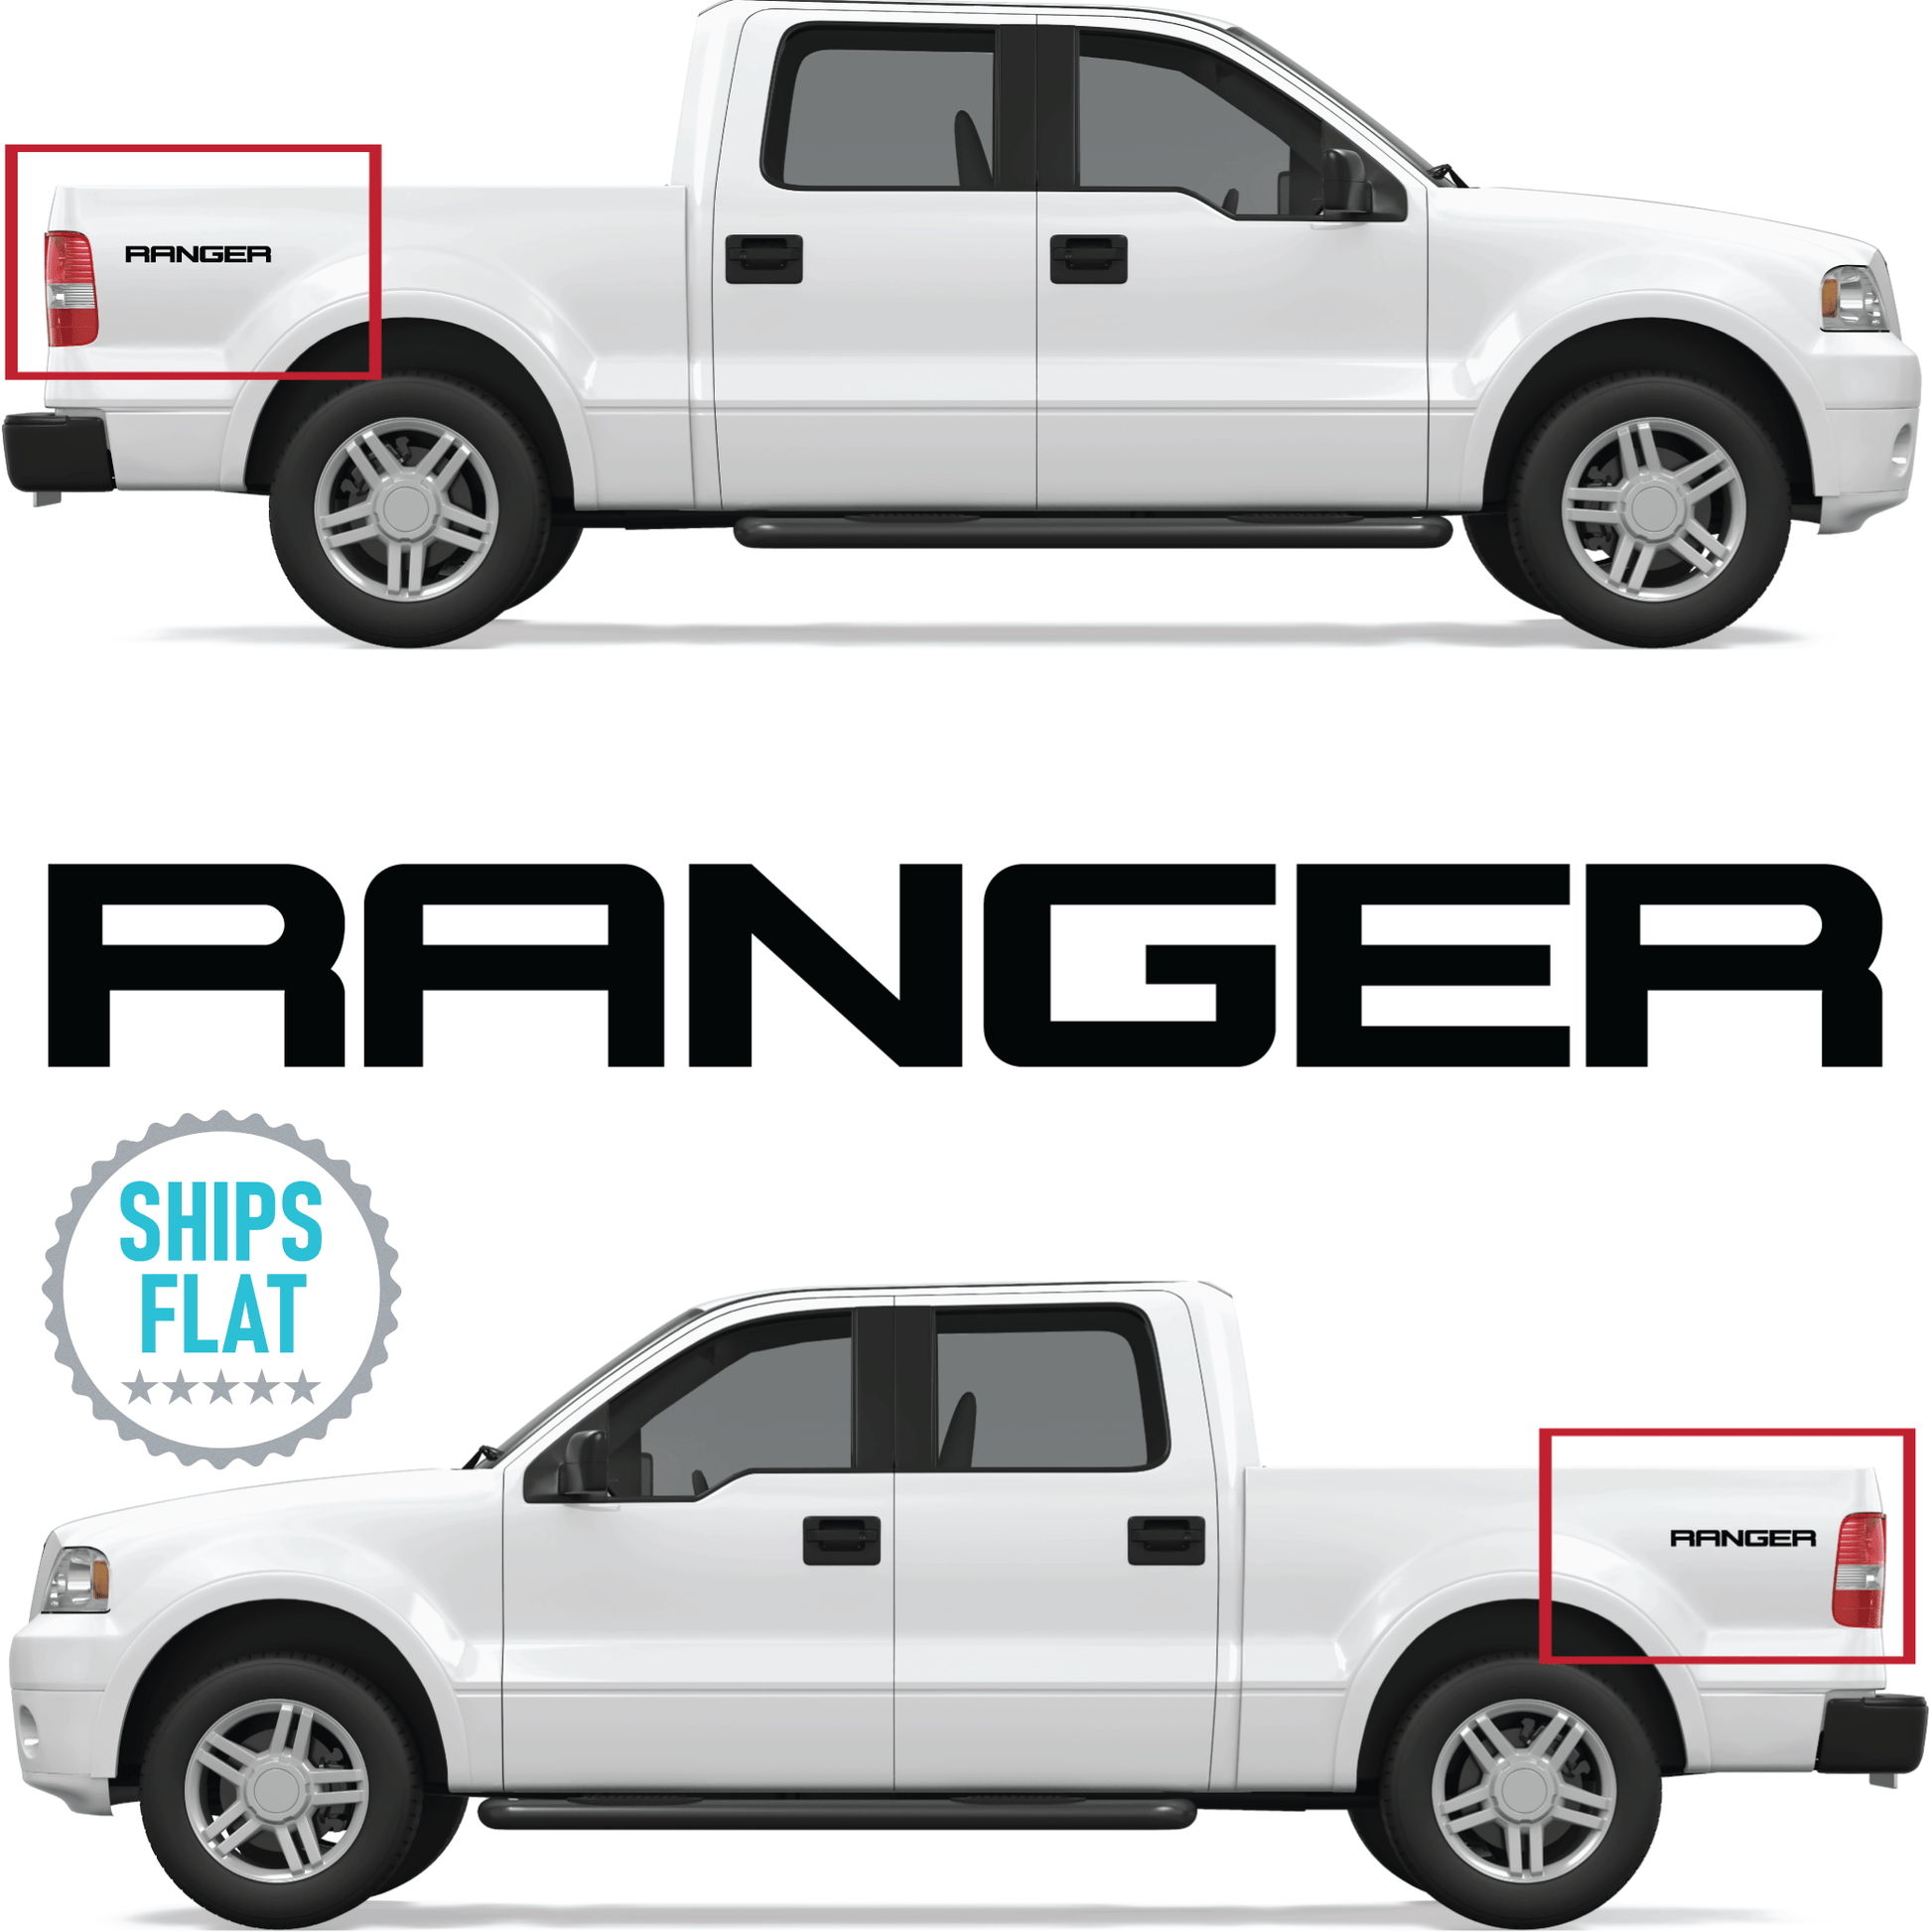 Shop Vinyl Design Ranger Trucks Replacement Bedside Decals #002 Vehicle decal 001 Black Gloss Shop Vinyl Design decals stickers